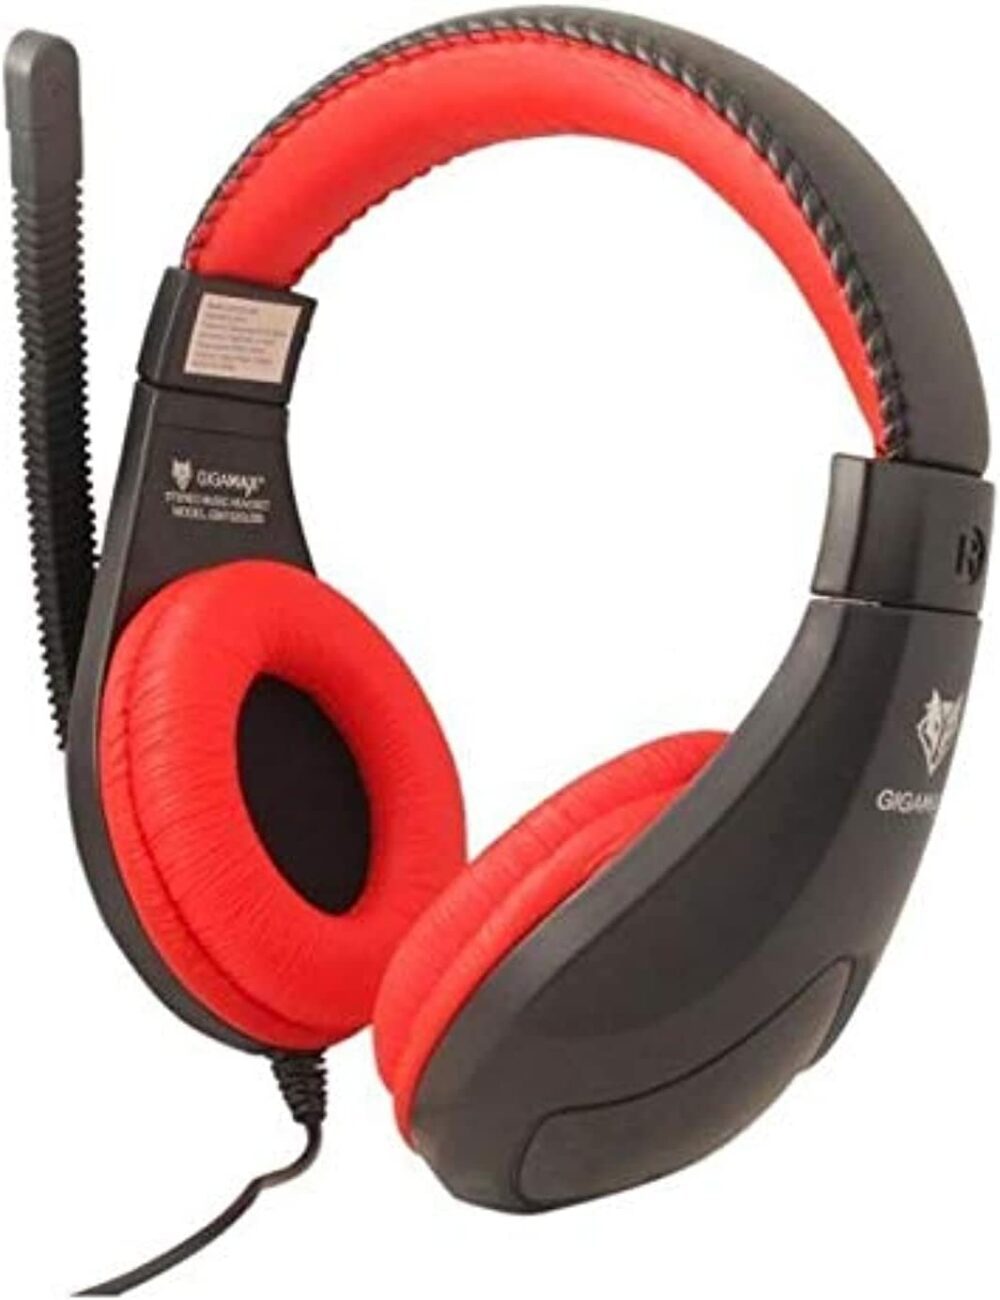 GM530 ،Stereo Headphones ،Gigamax، أفضل سماعات رأس سلكية مع ميكروفون